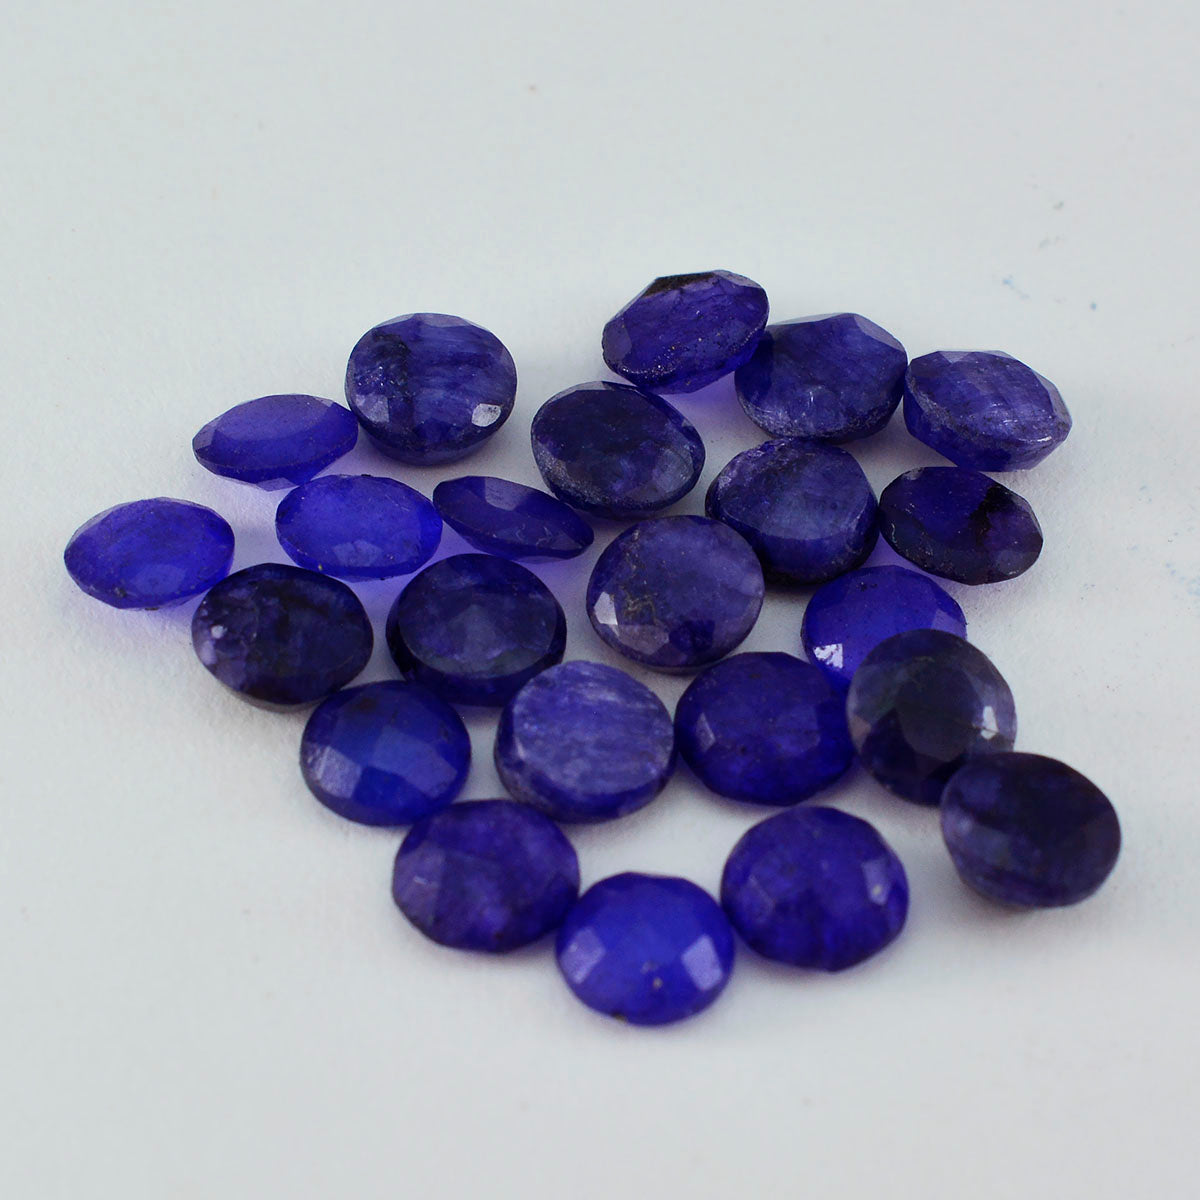 Riyogems 1PC Natural Blue Jasper Faceted 5x5 mm Round Shape beauty Quality Stone